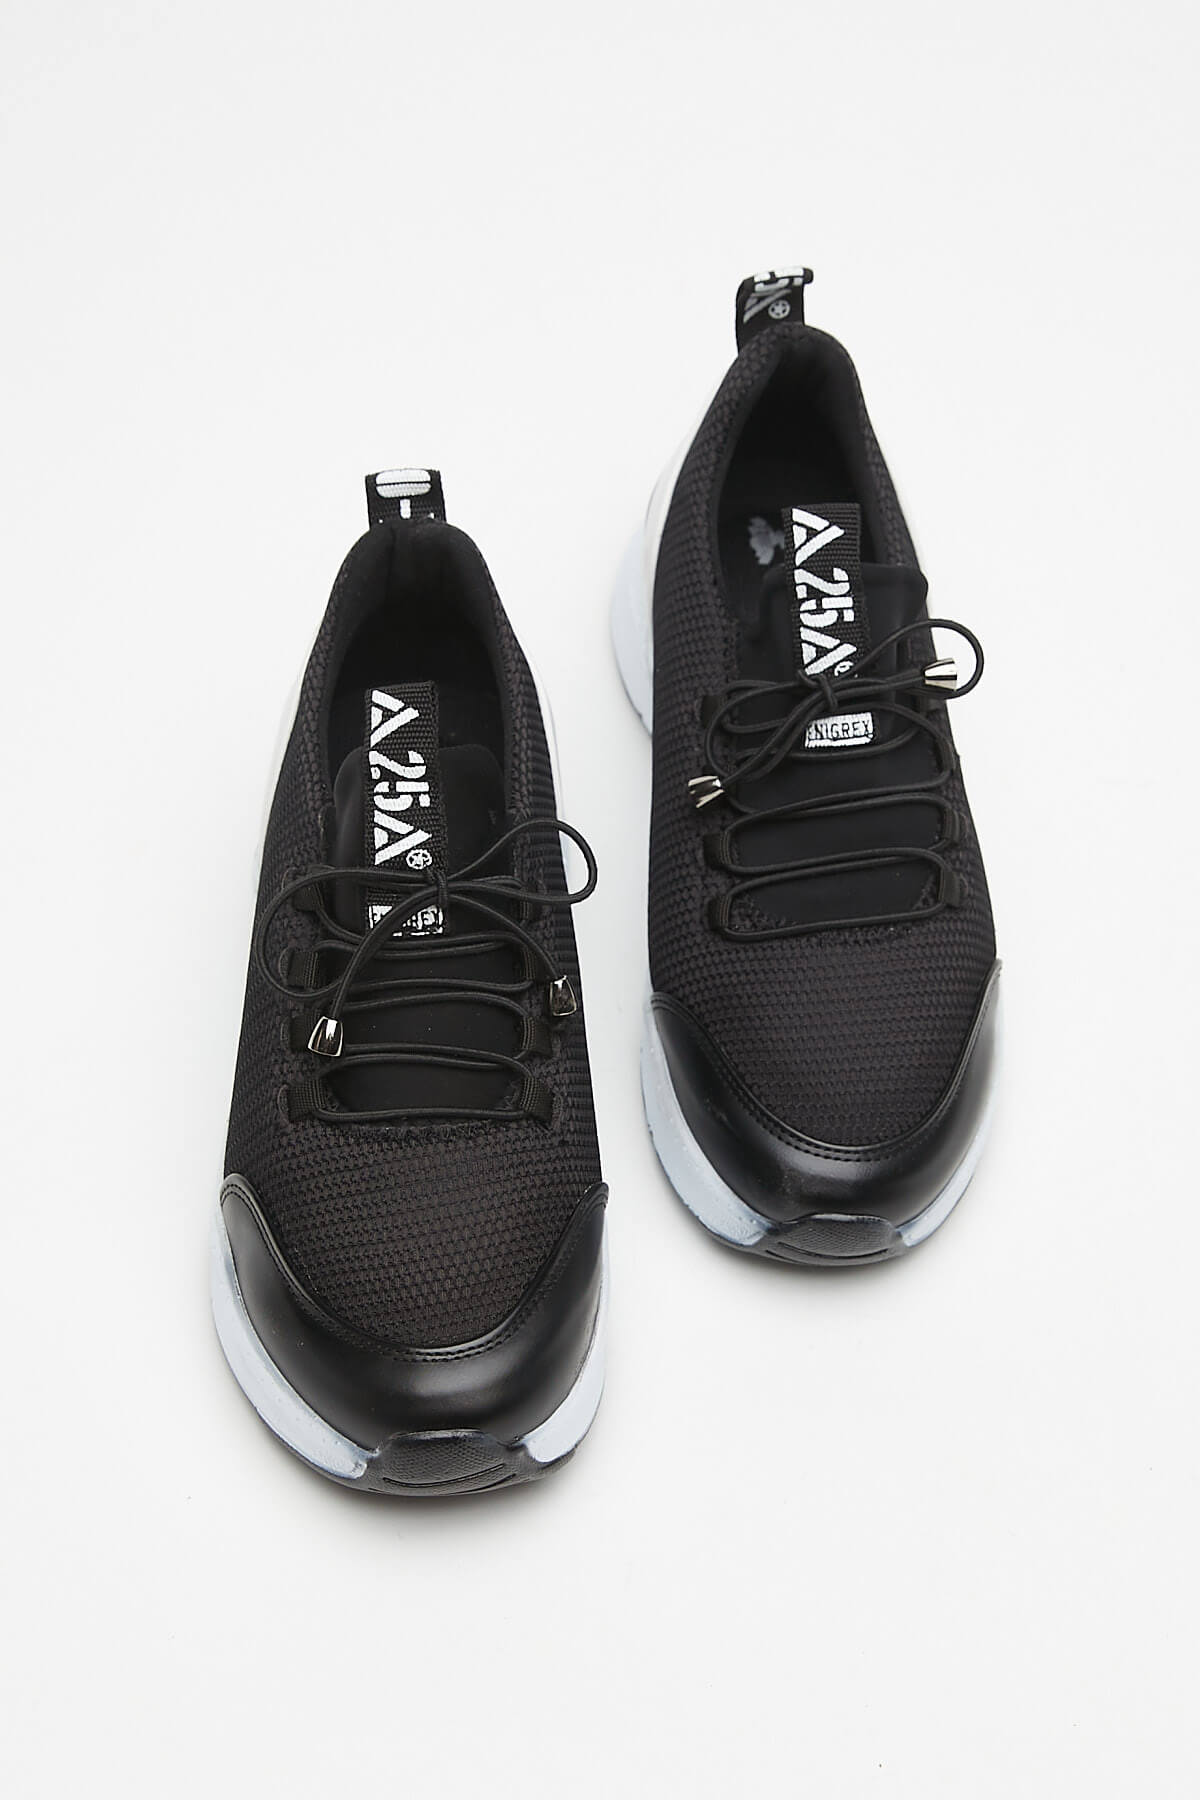 Kadın Sneakers Siyah 2115004Y - Thumbnail